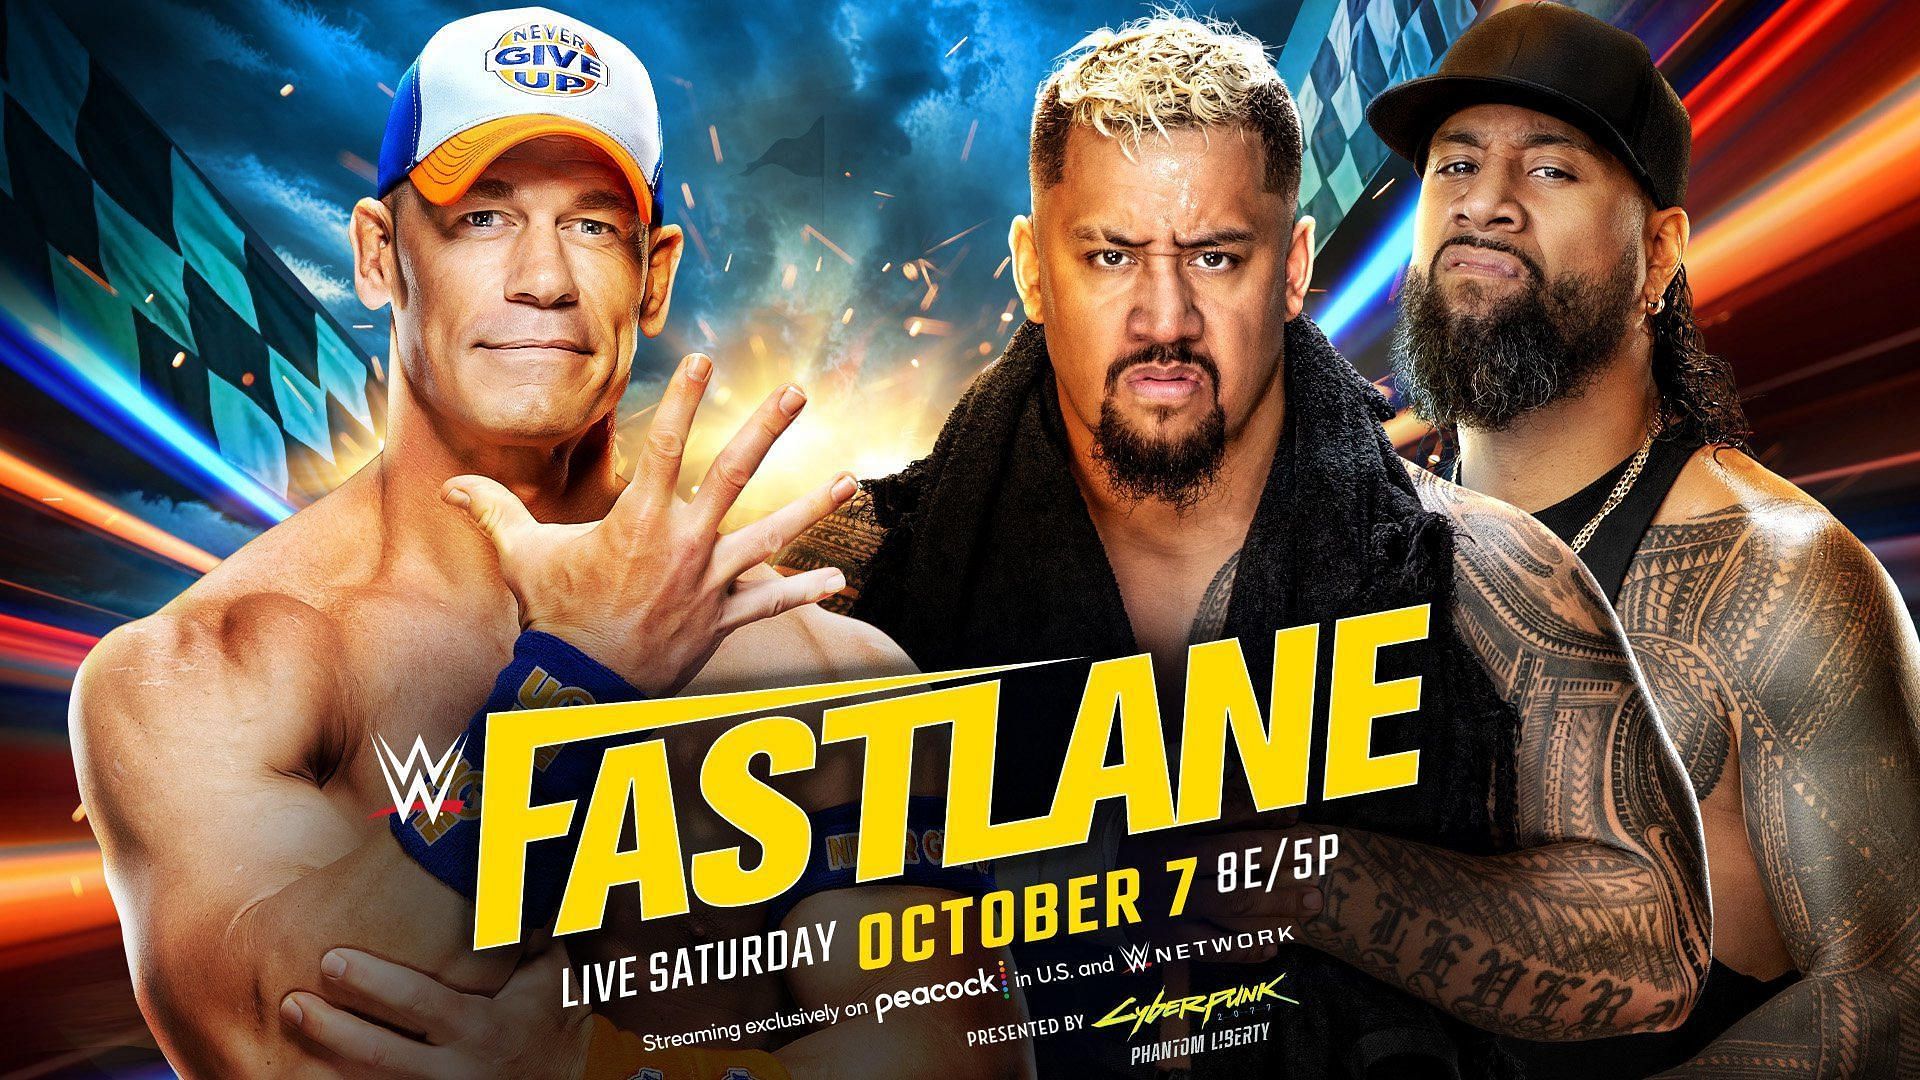 John Cena will have his hands full at Fastlane.